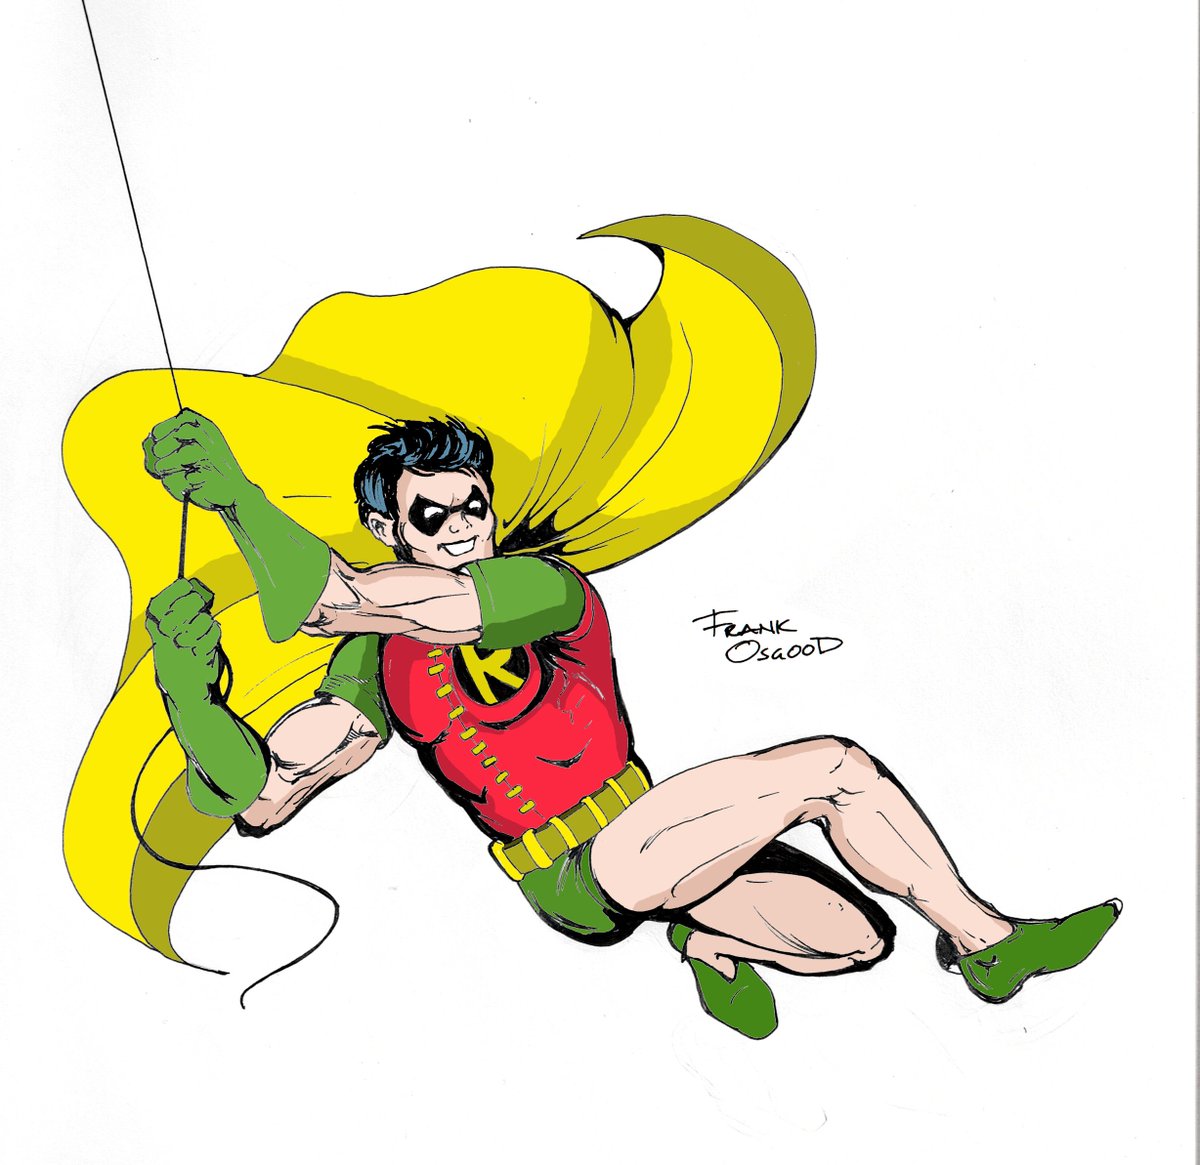 Robin swinging #robin #dc #dcfanart #dccomics #dccomicsfanart #robindccomics #dickgrayson #comic #comics #comicart #comicartist #comicartists #frankosgoodcomix #osgoodcomix #indiecomicartist #superheroes #fanart #comicfanart #batmanfanart #batman